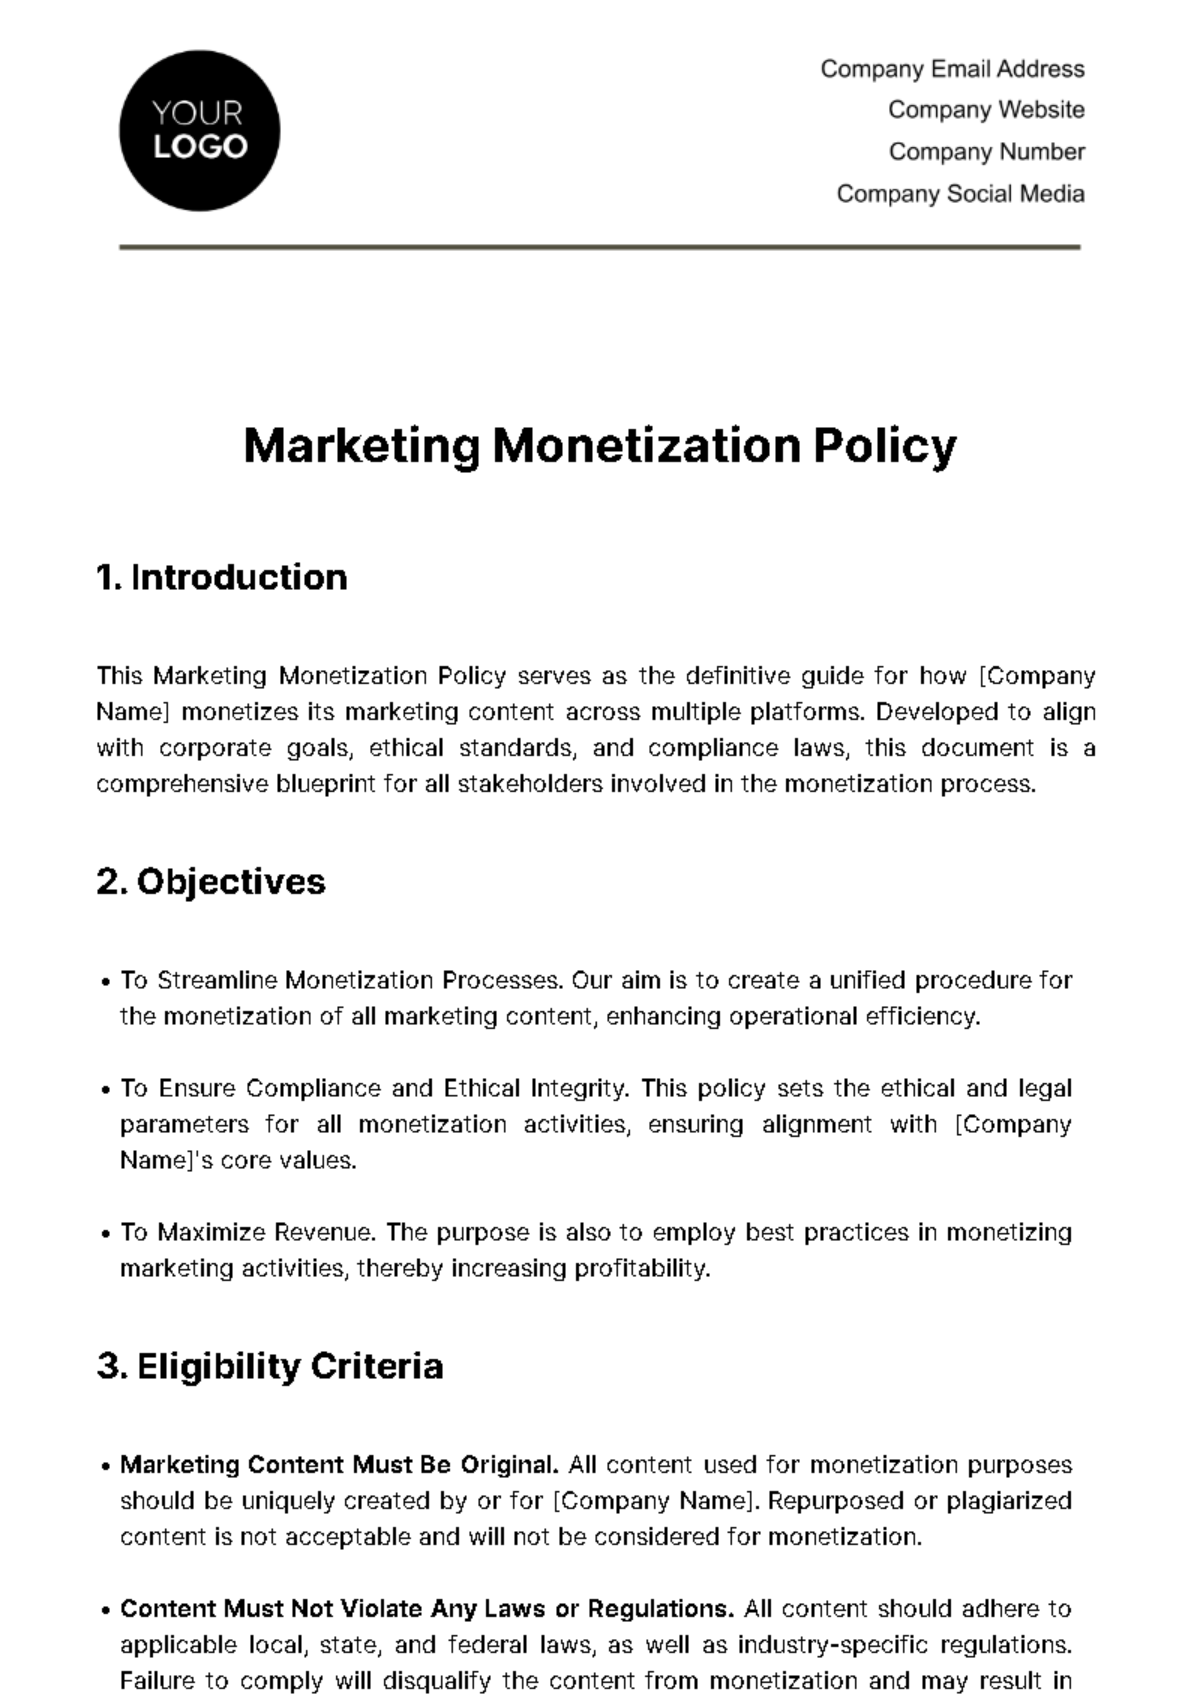 Marketing Monetization Policy Template